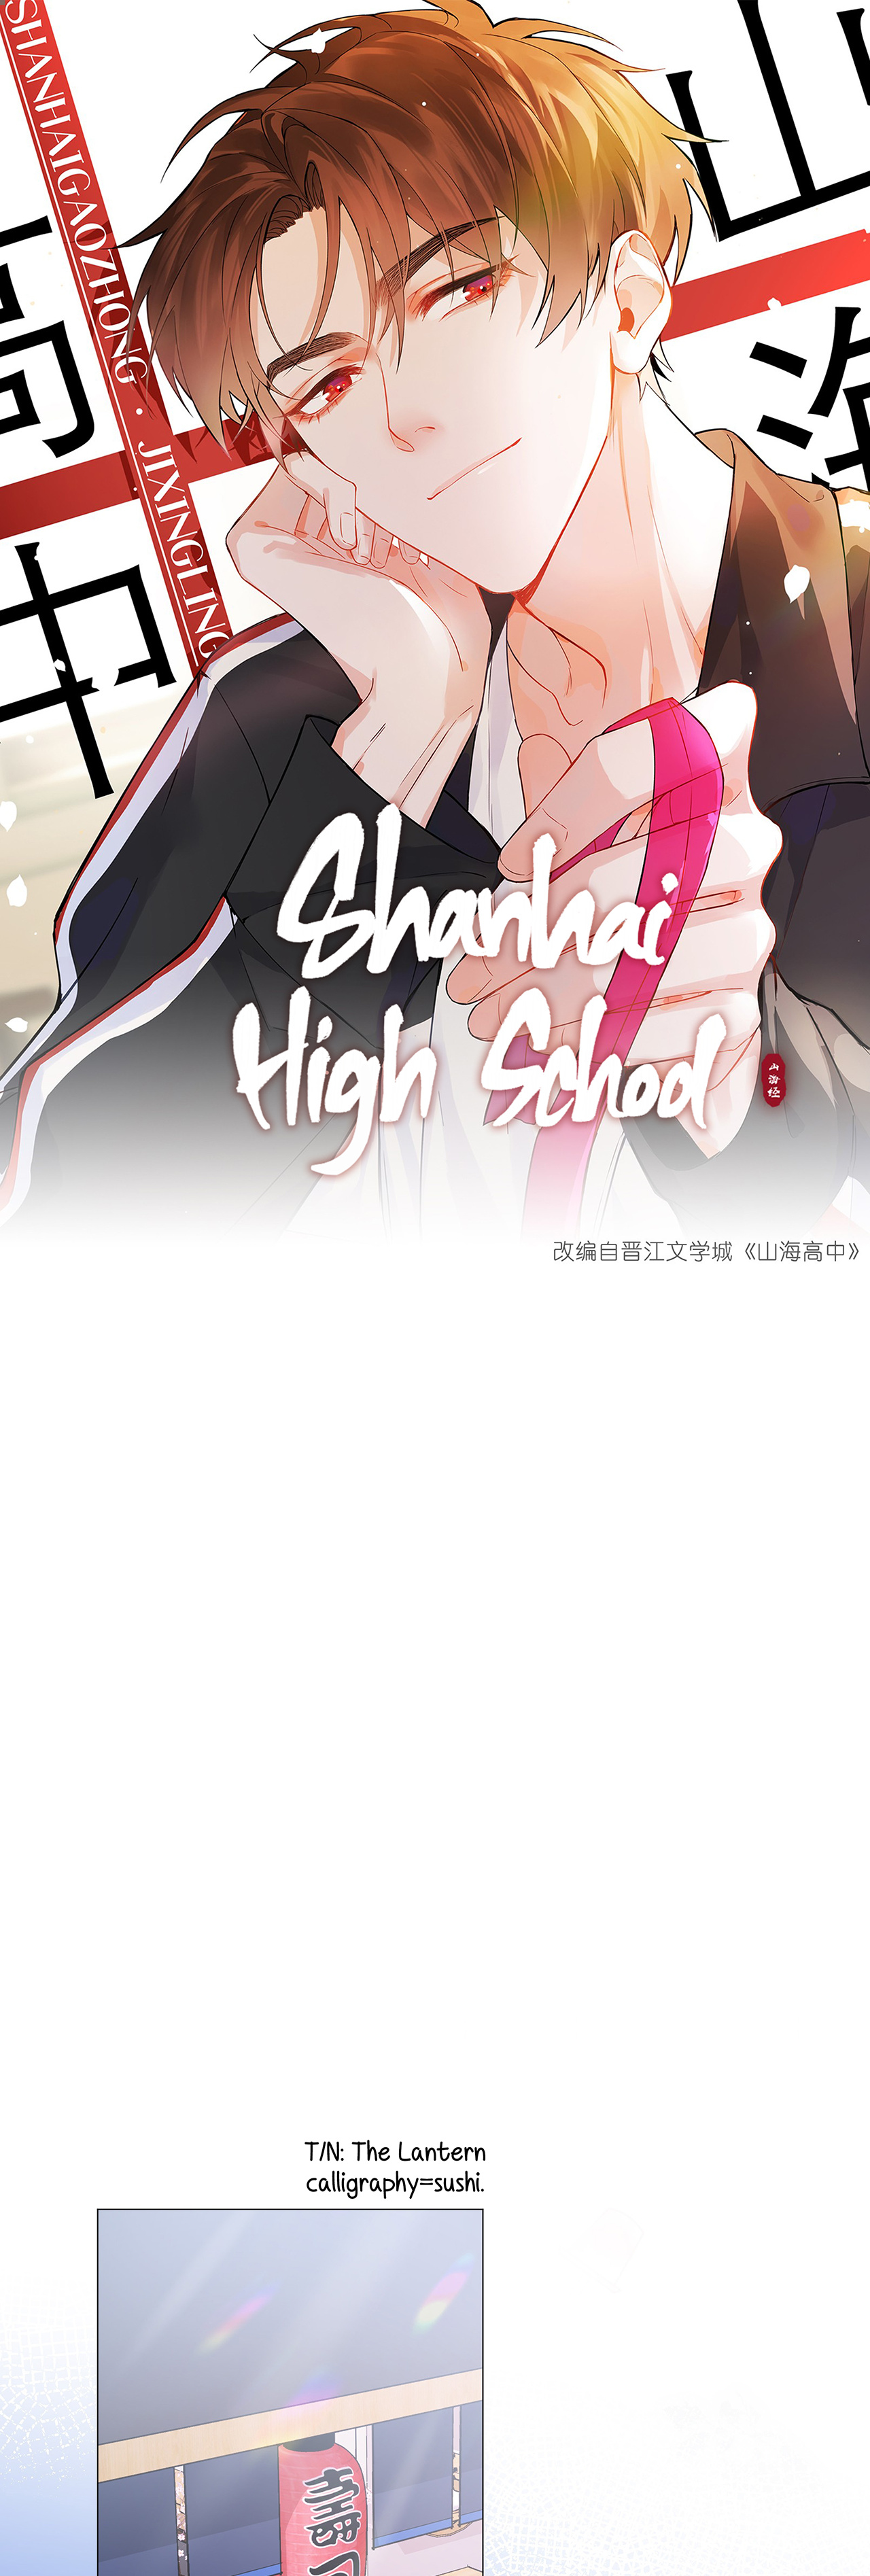 Shanhai High School - Page 2